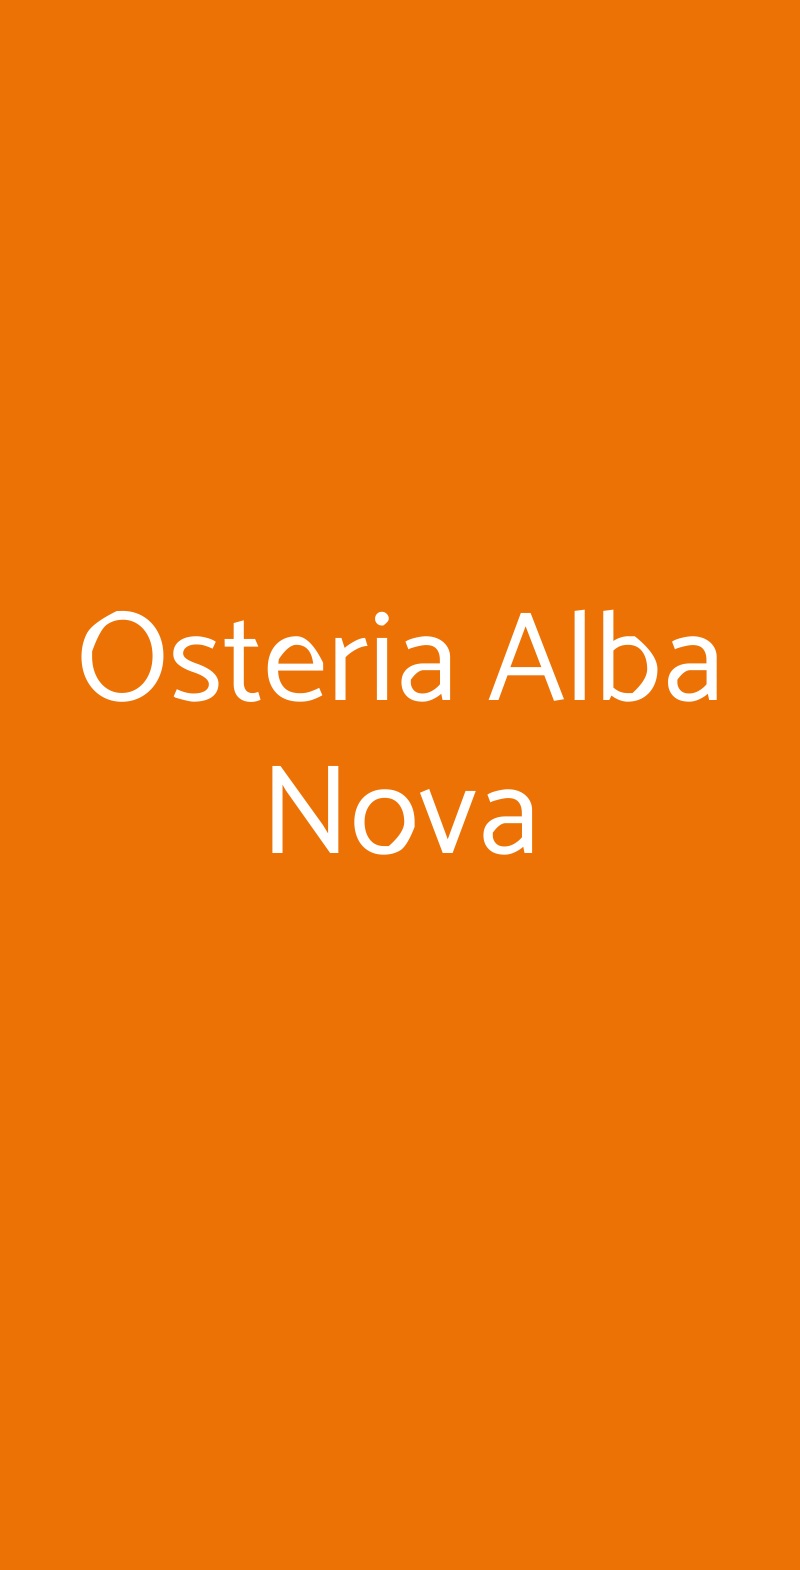 Osteria Alba Nova Venezia menù 1 pagina